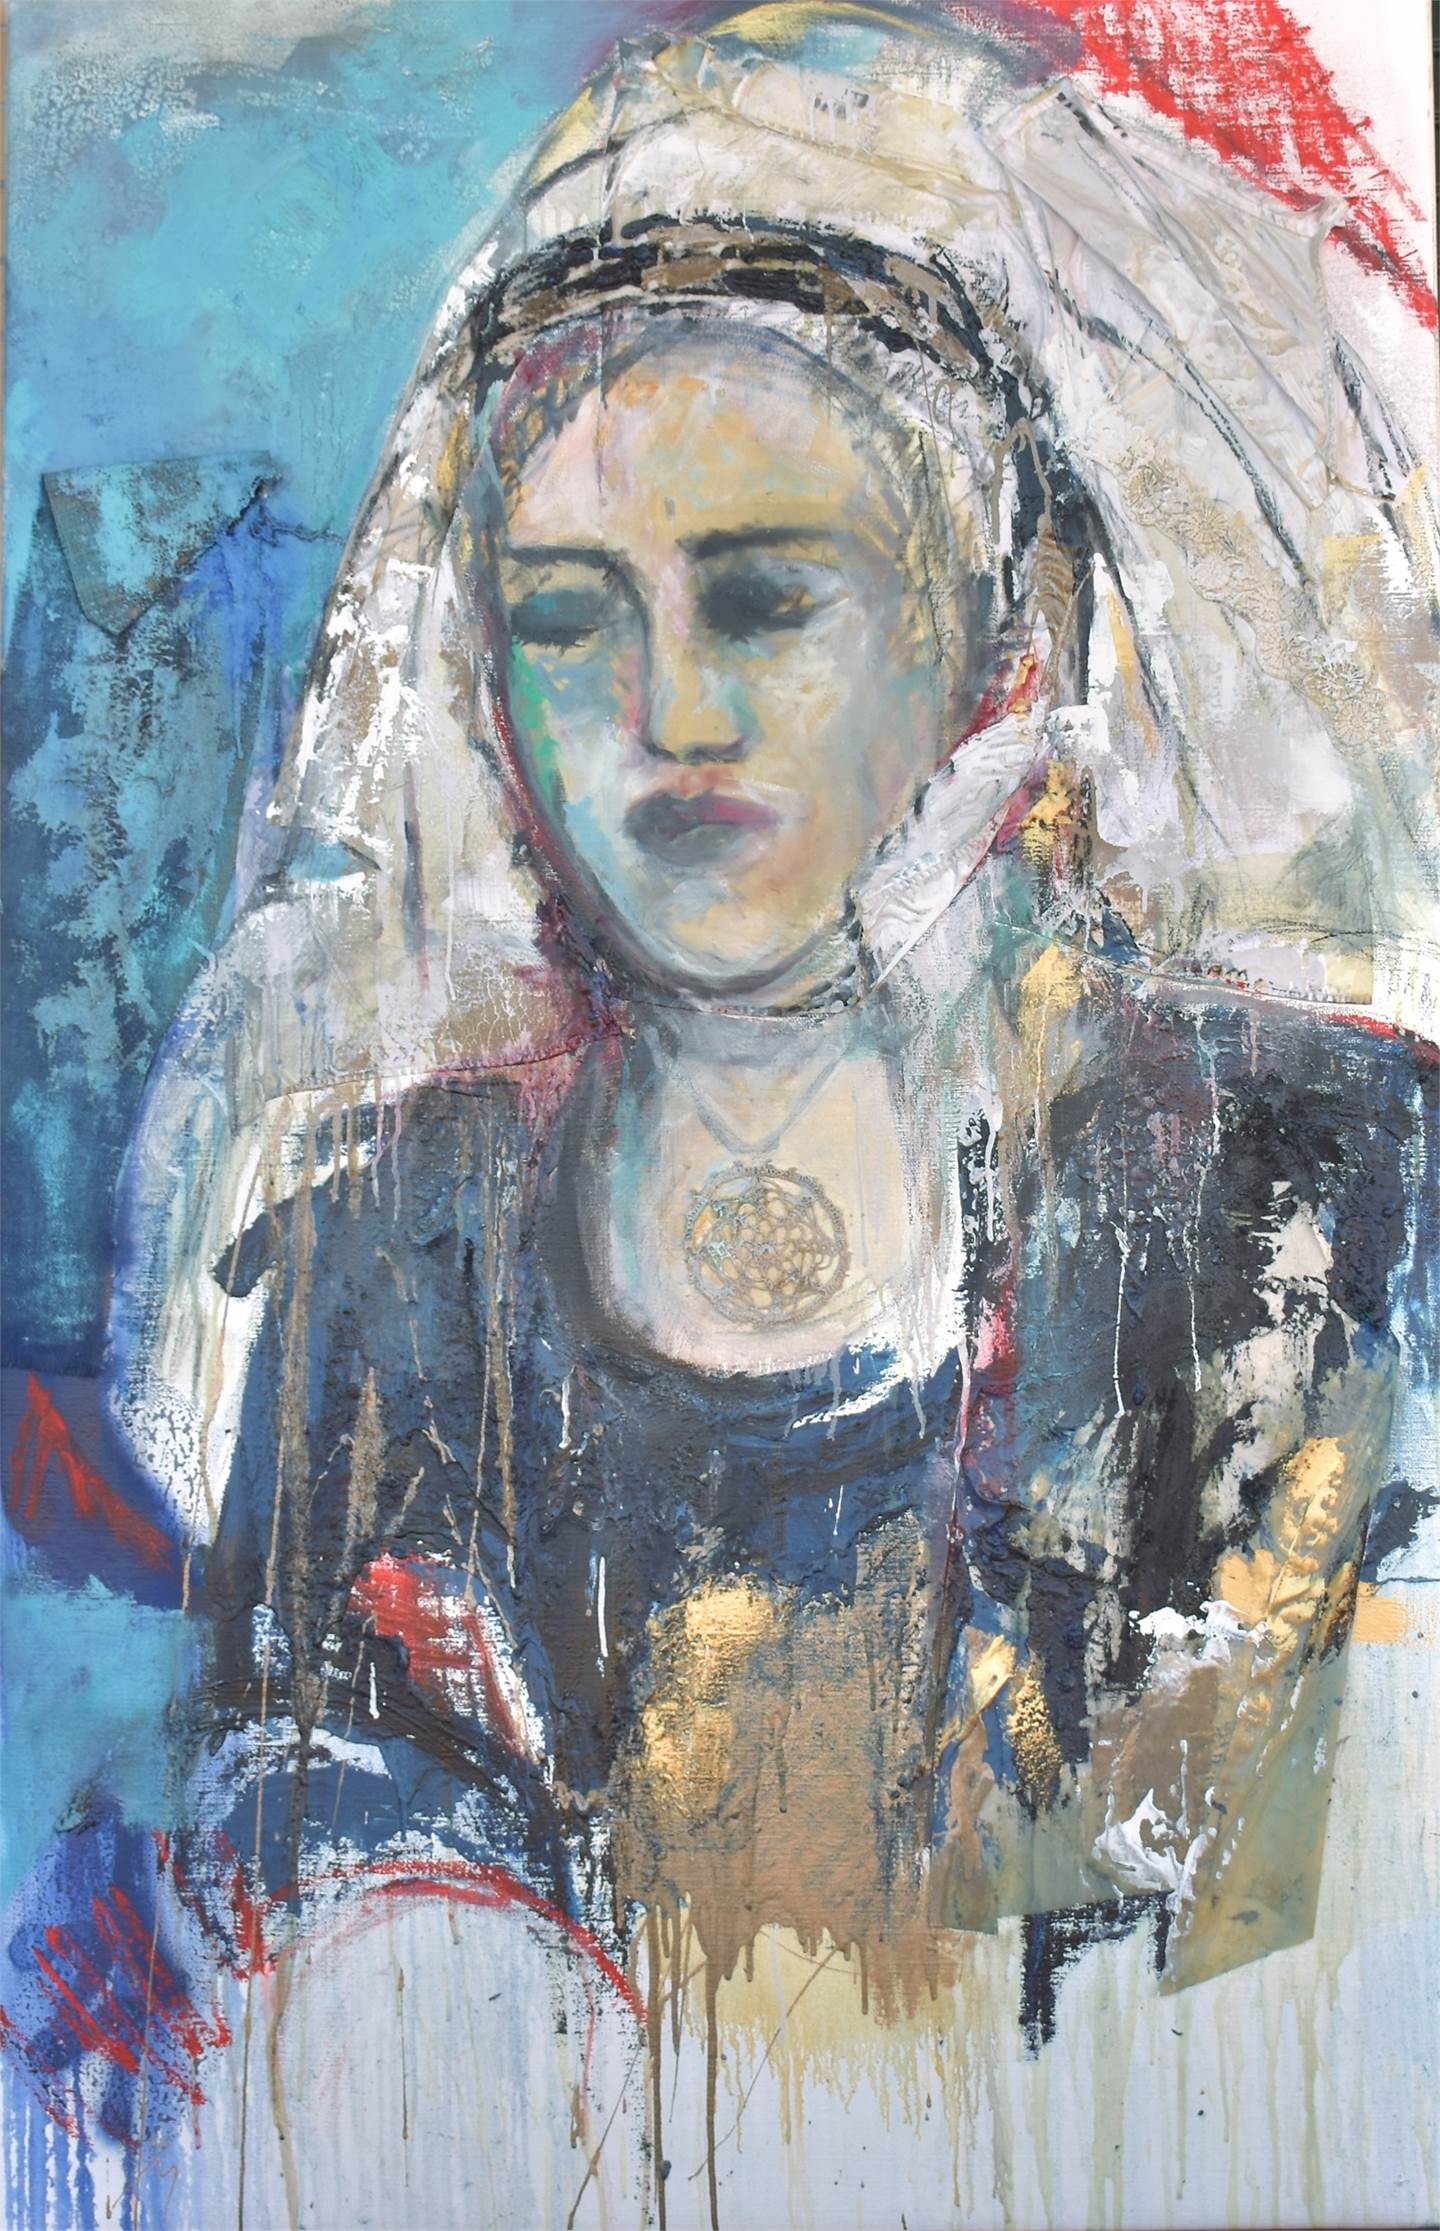 The Bride, original Human Figure Mixed Technique Painting by ELISA DA COSTA